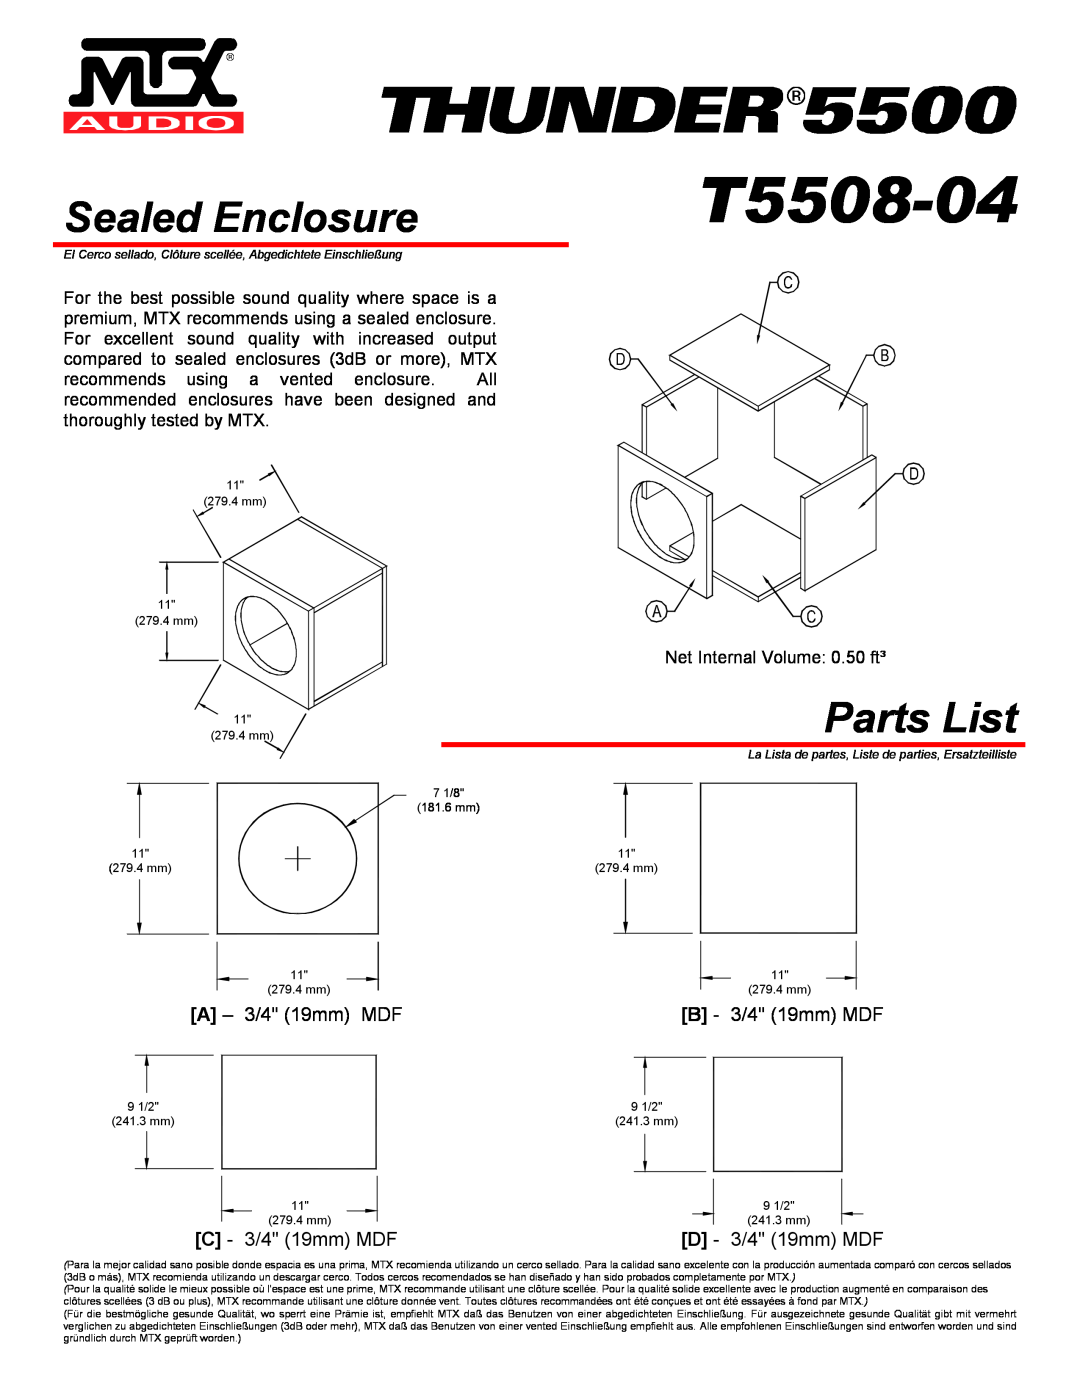 MTX Audio T5508-04 Sealed Enclosure, Parts List, A - 3/4 19mm MDF, B - 3/4 19mm MDF, C - 3/4 19mm MDF, D - 3/4 19mm MDF 